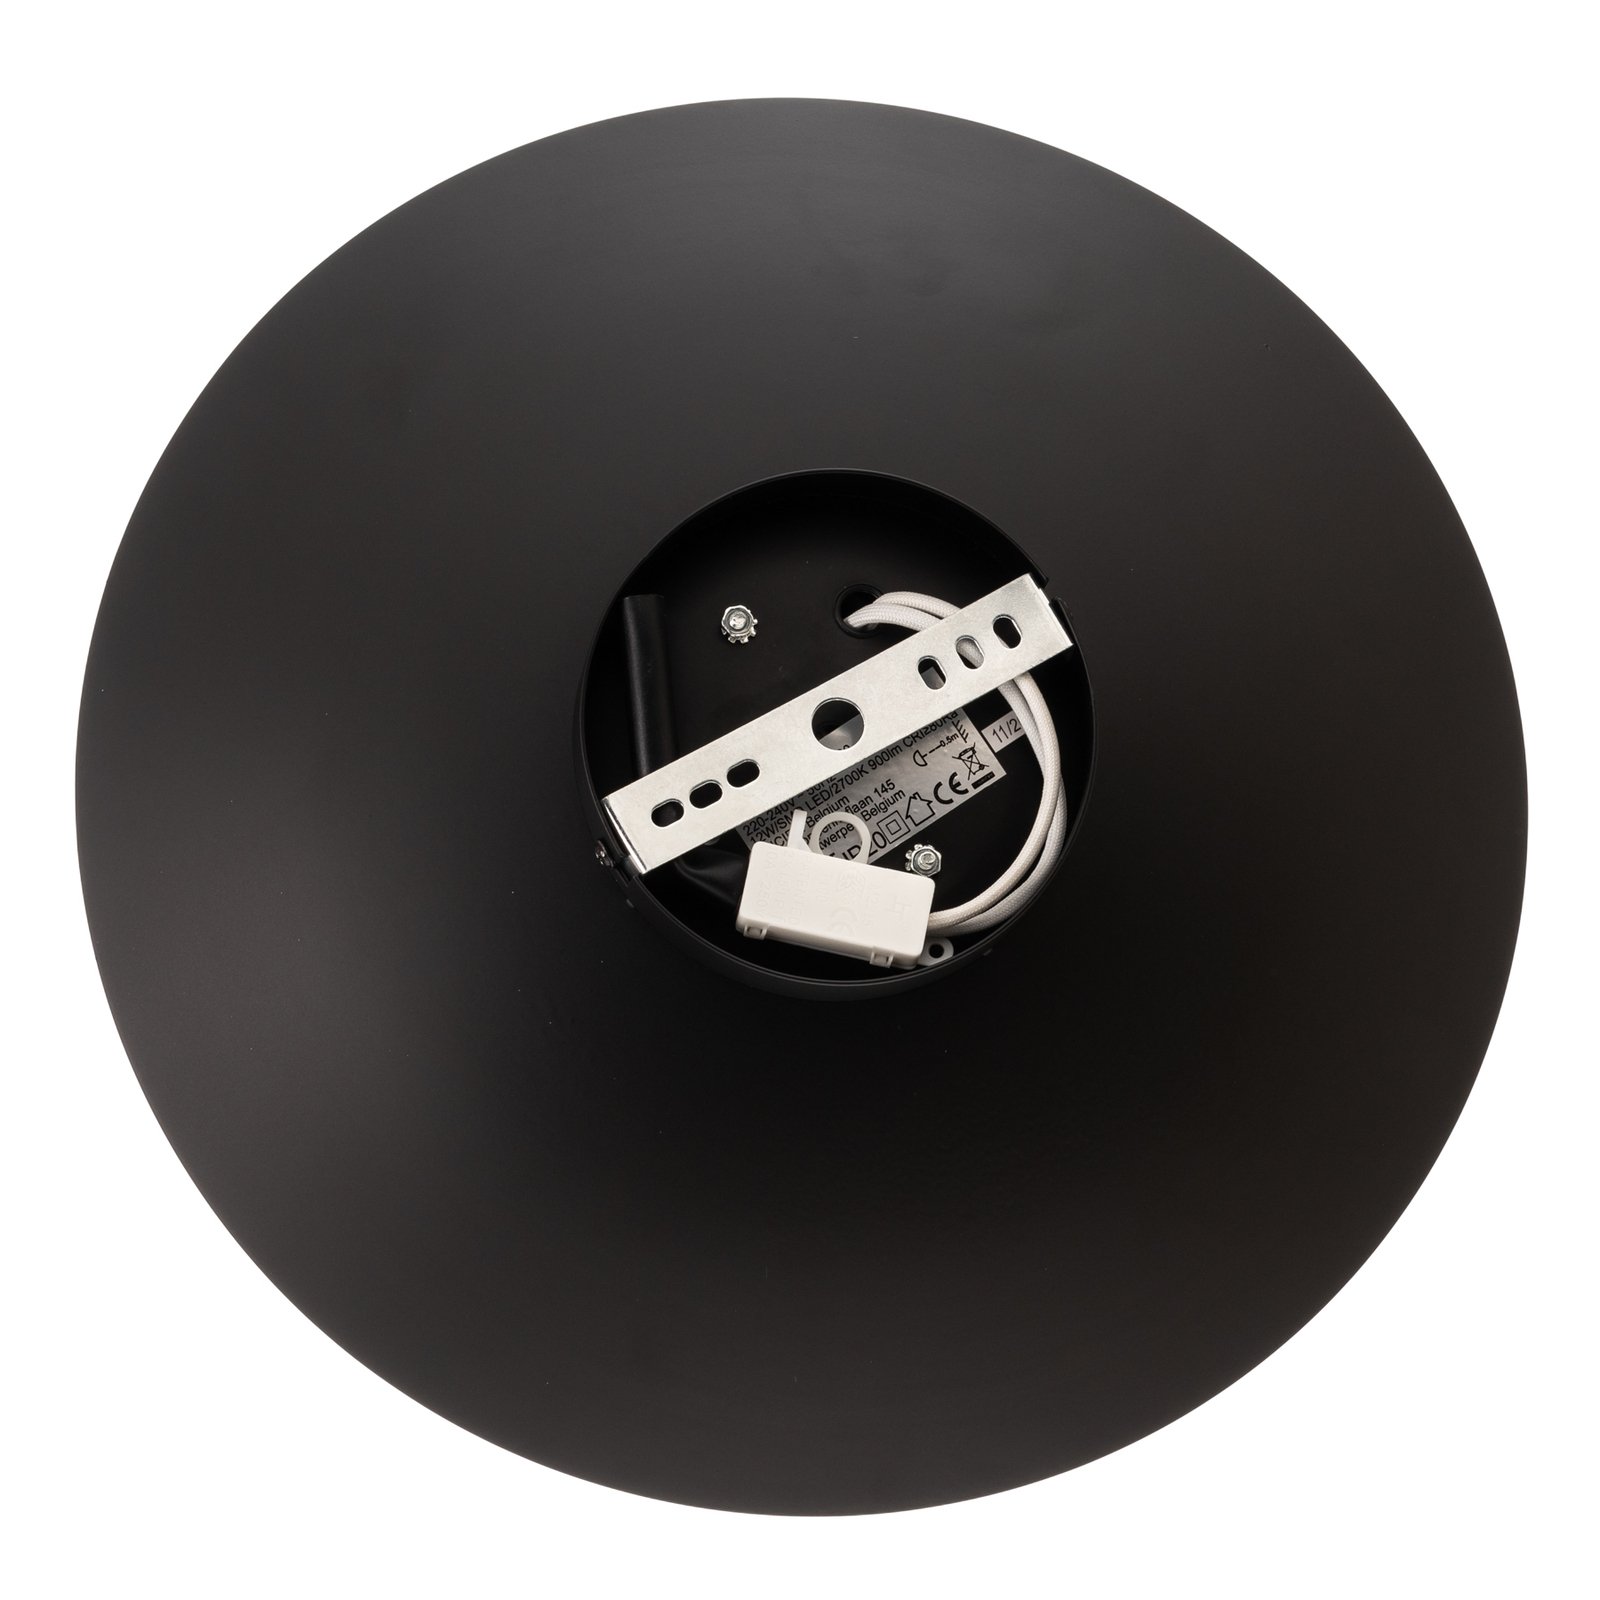 Plafonnier LED Foskal en noir, Ø 34,5 cm